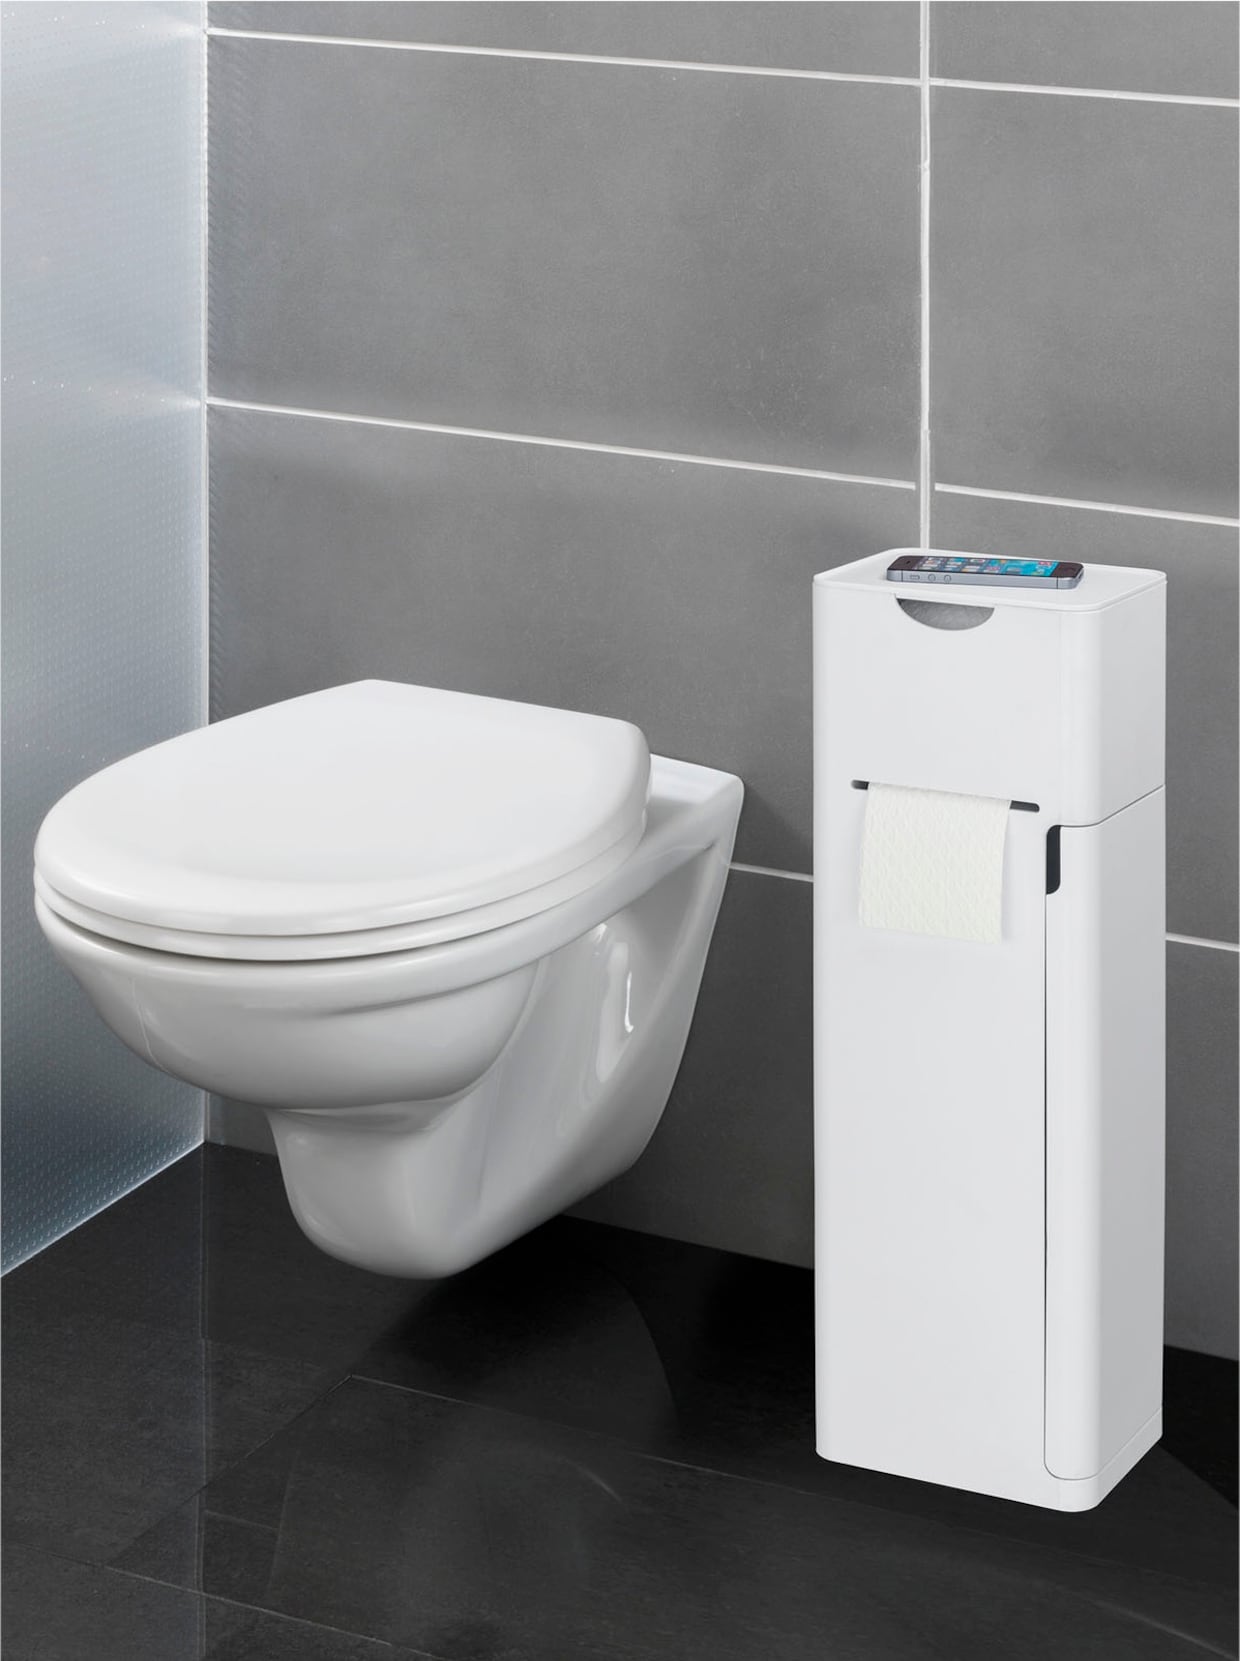 WC-Hygiene-Center - weiss